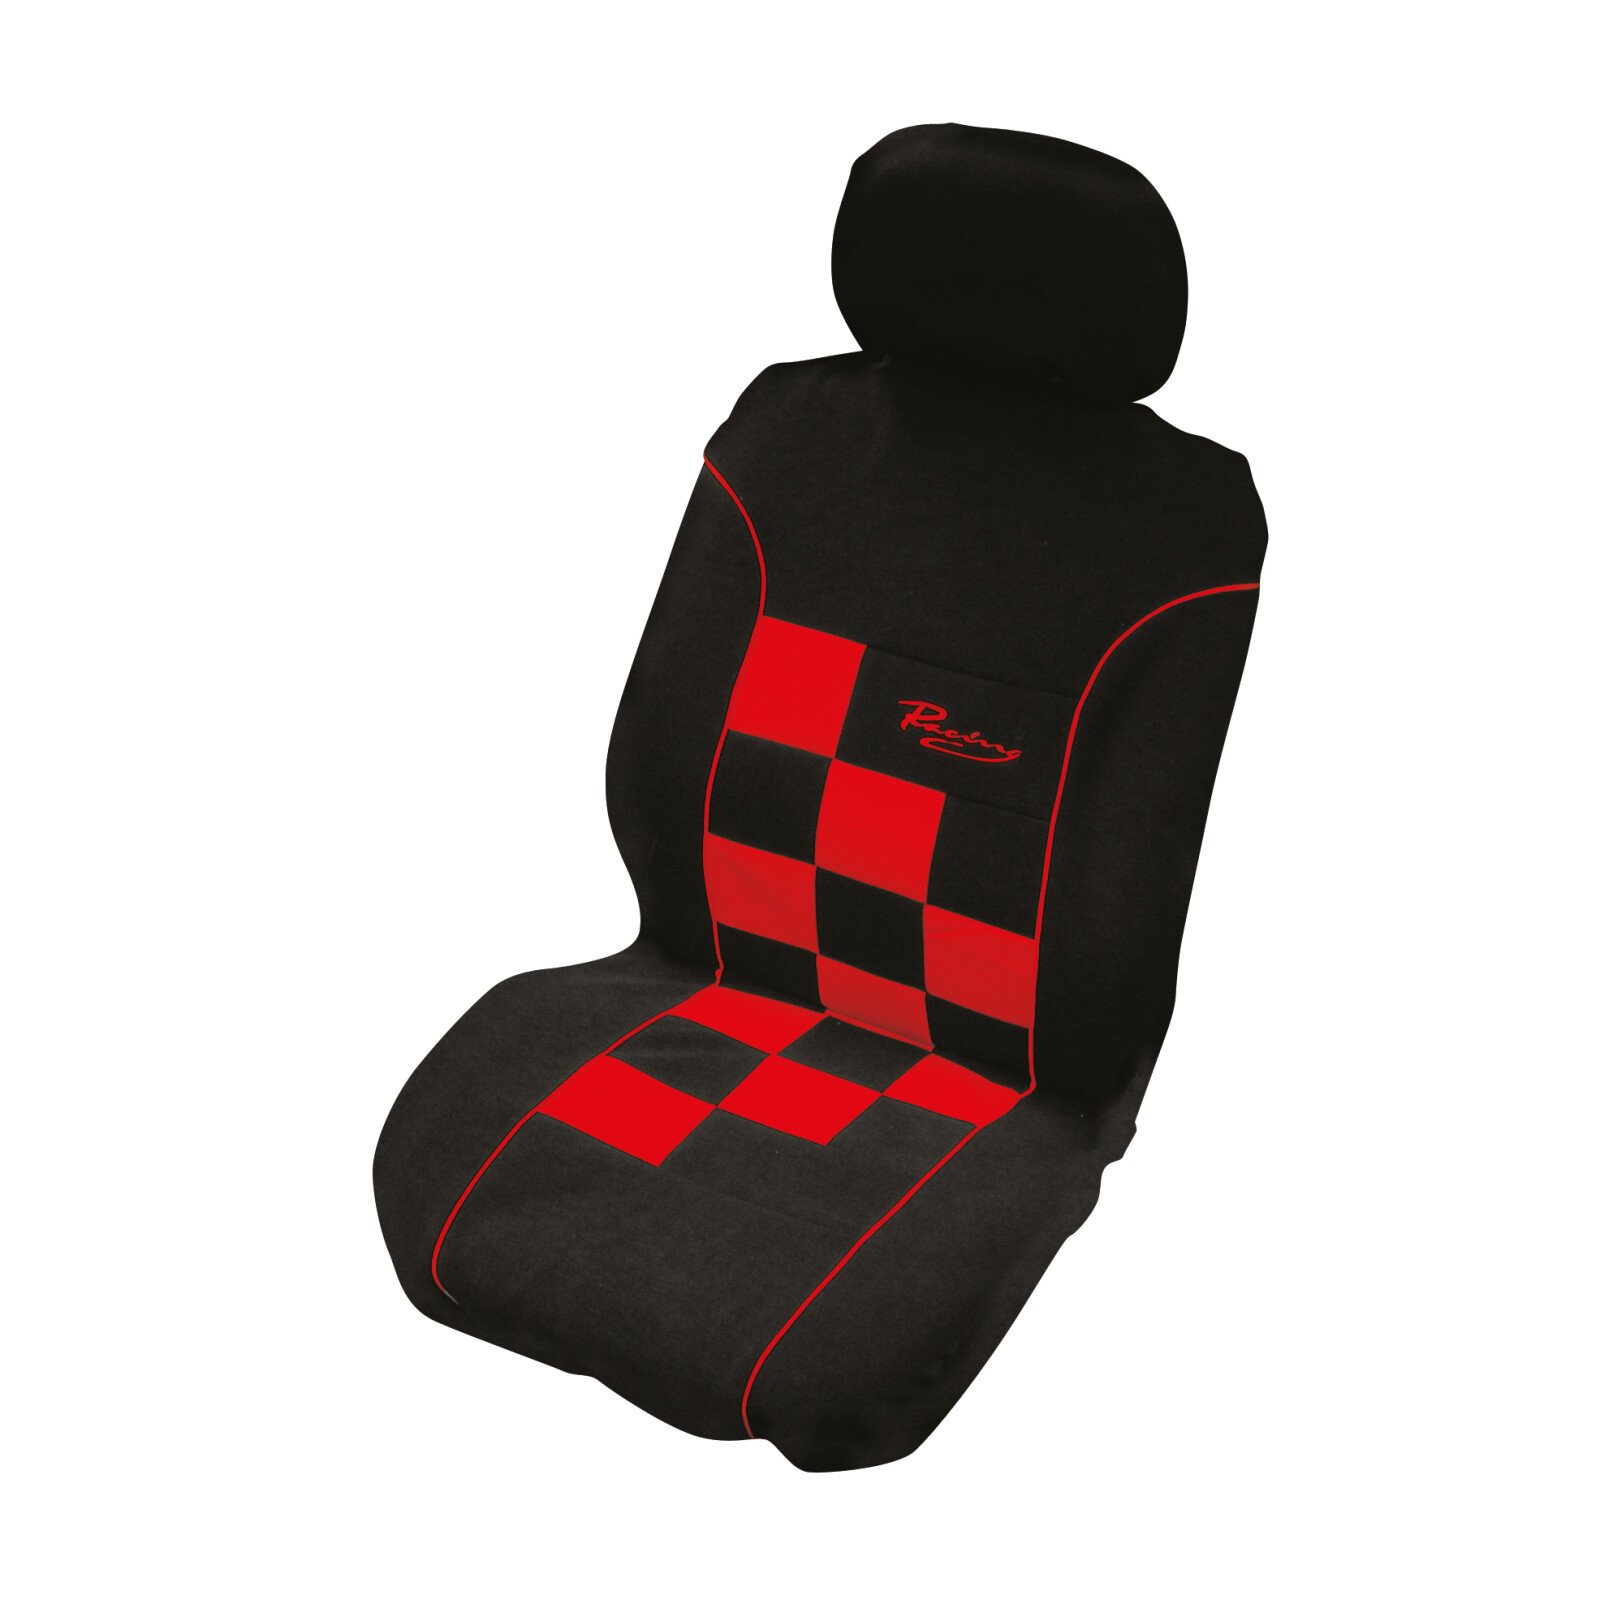 Seatcover set 8 pcs 'Racing' red airbag thumb